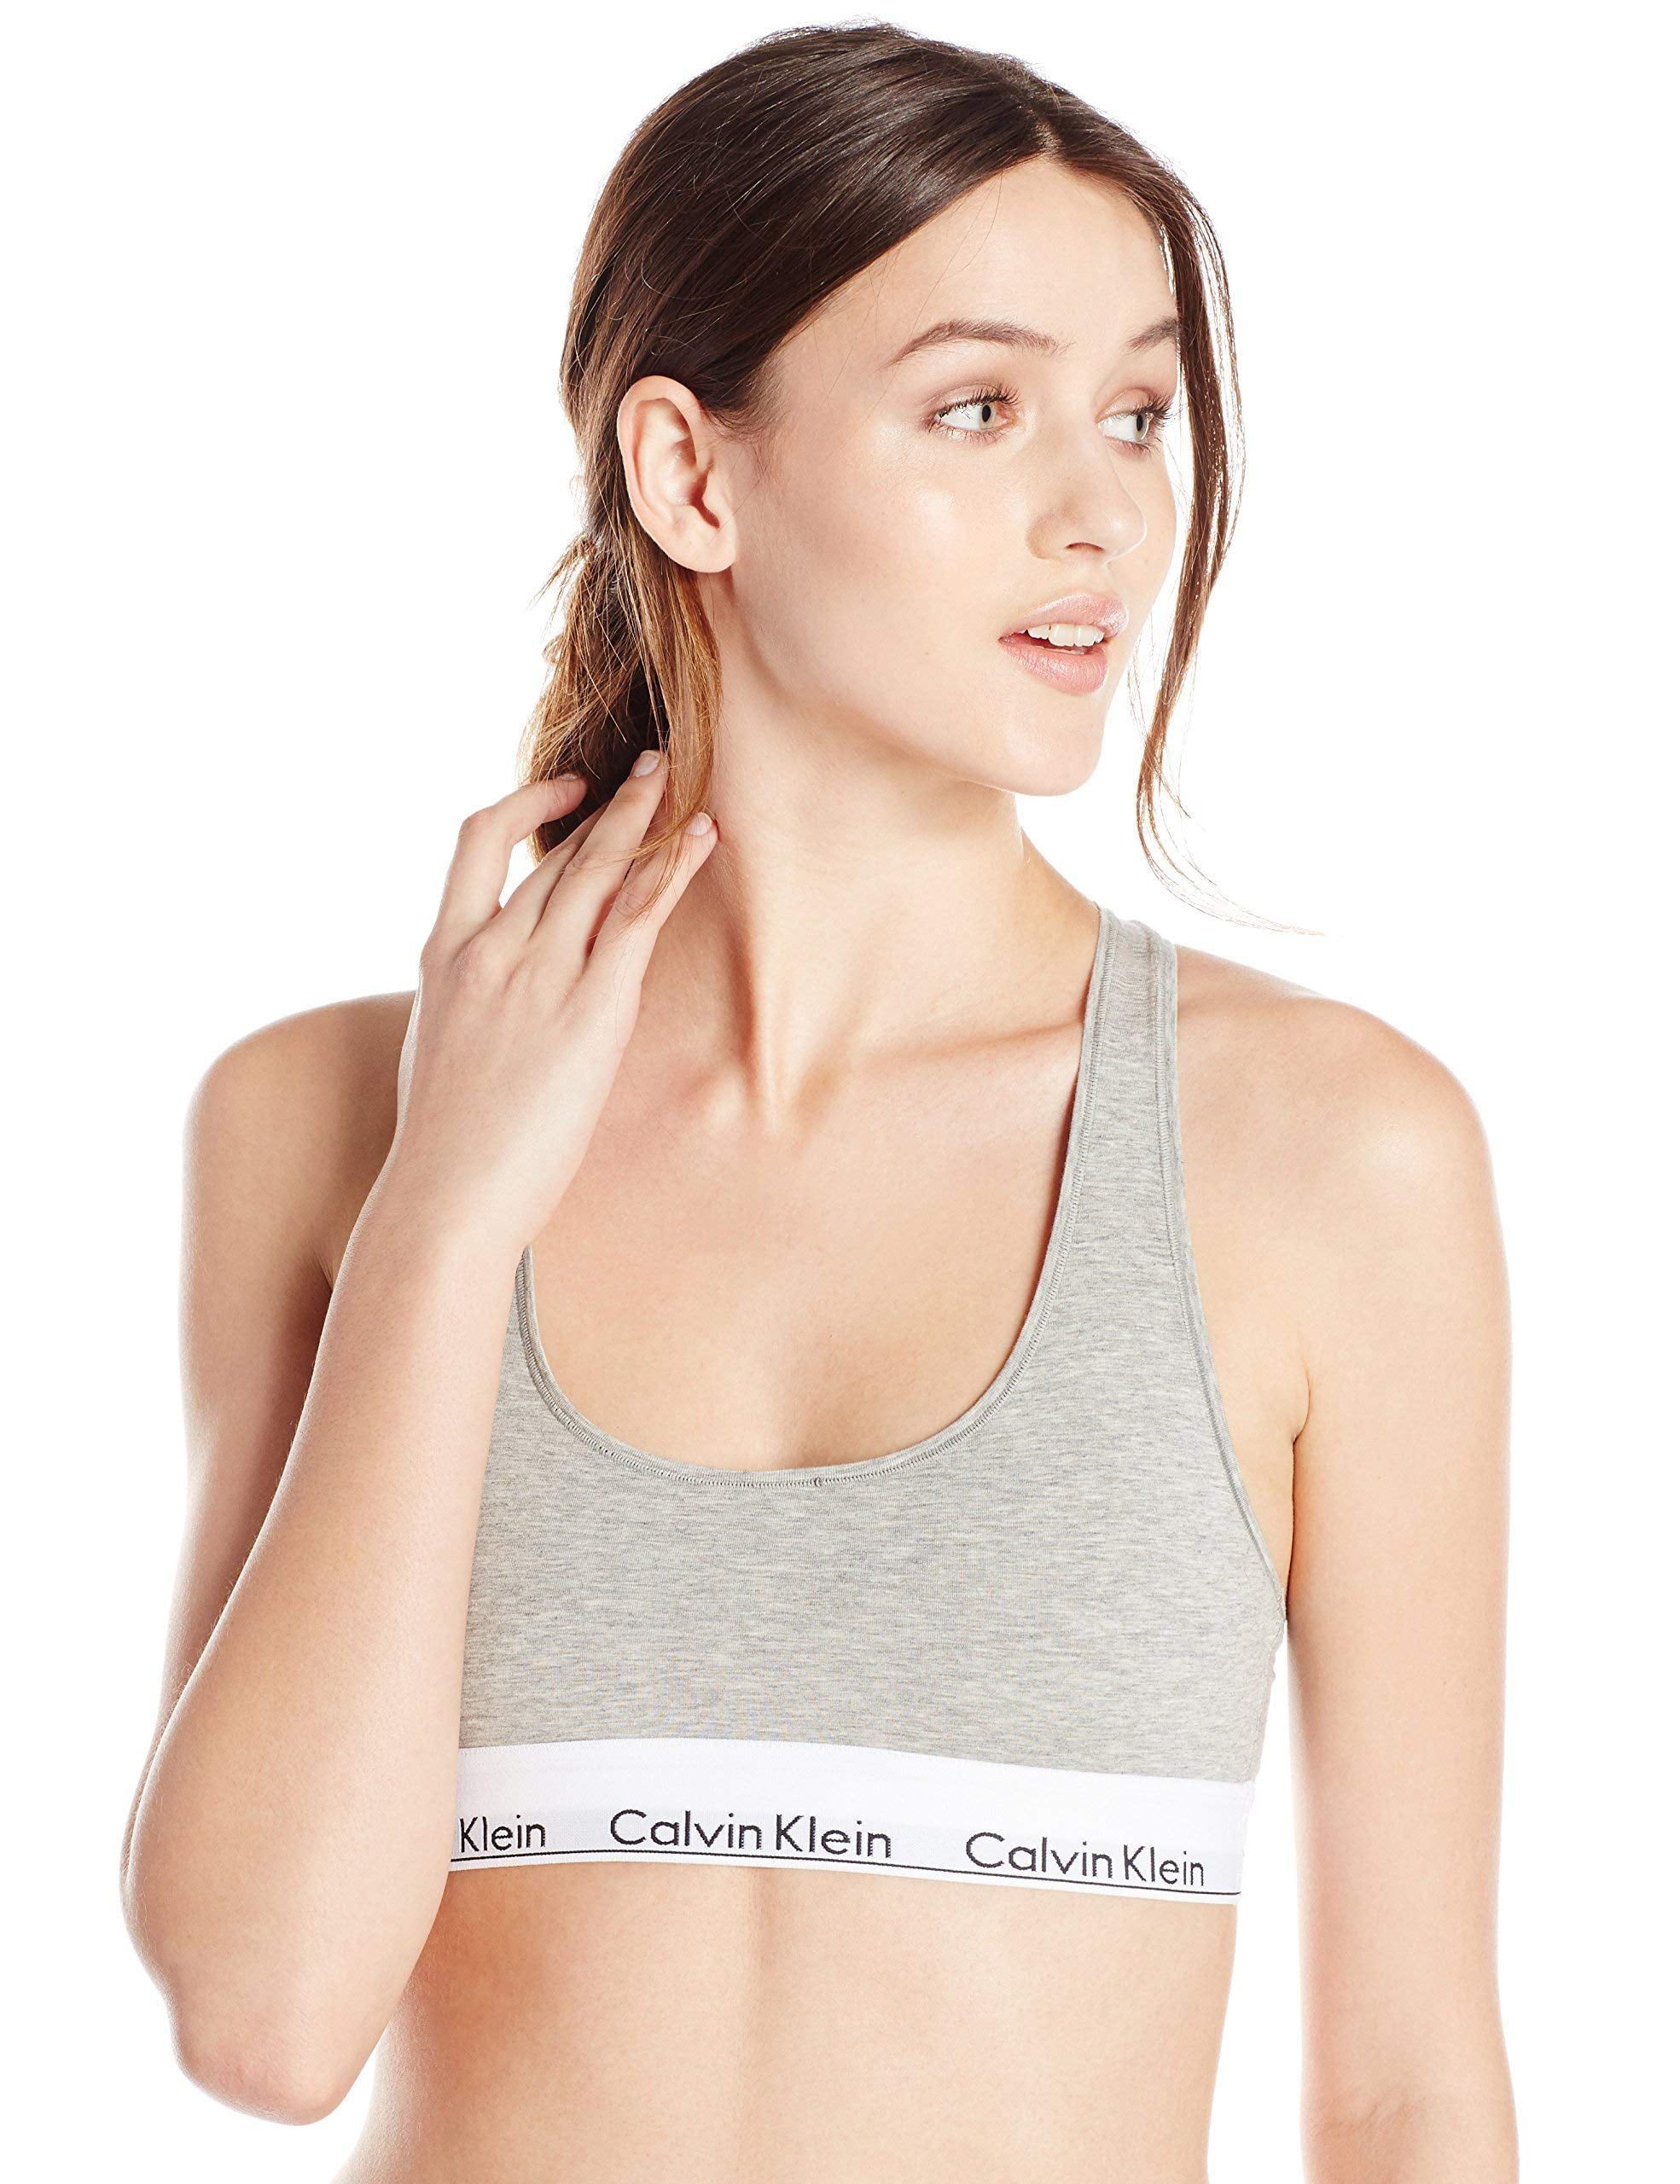 miljø Spectacle krone Calvin Klein Women's Modern Cotton Skinny Strap Bralette Grey, Large -  Walmart.com